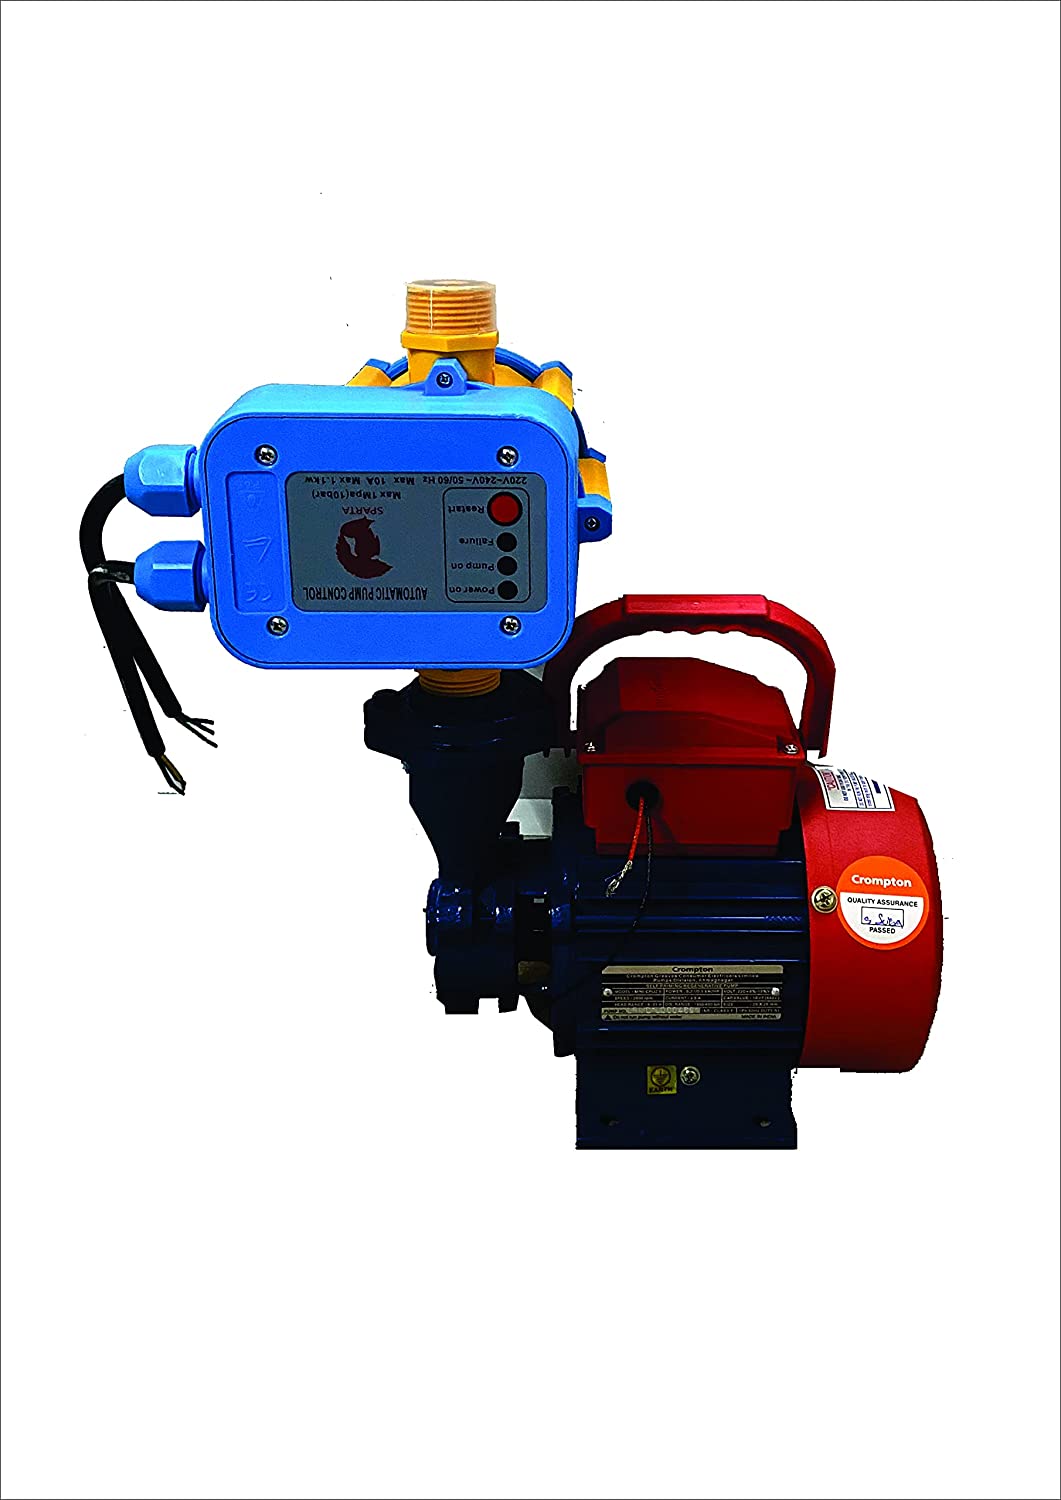 Crompton 0.5 HP Pressure Pump with Pump Control (Multicolour)